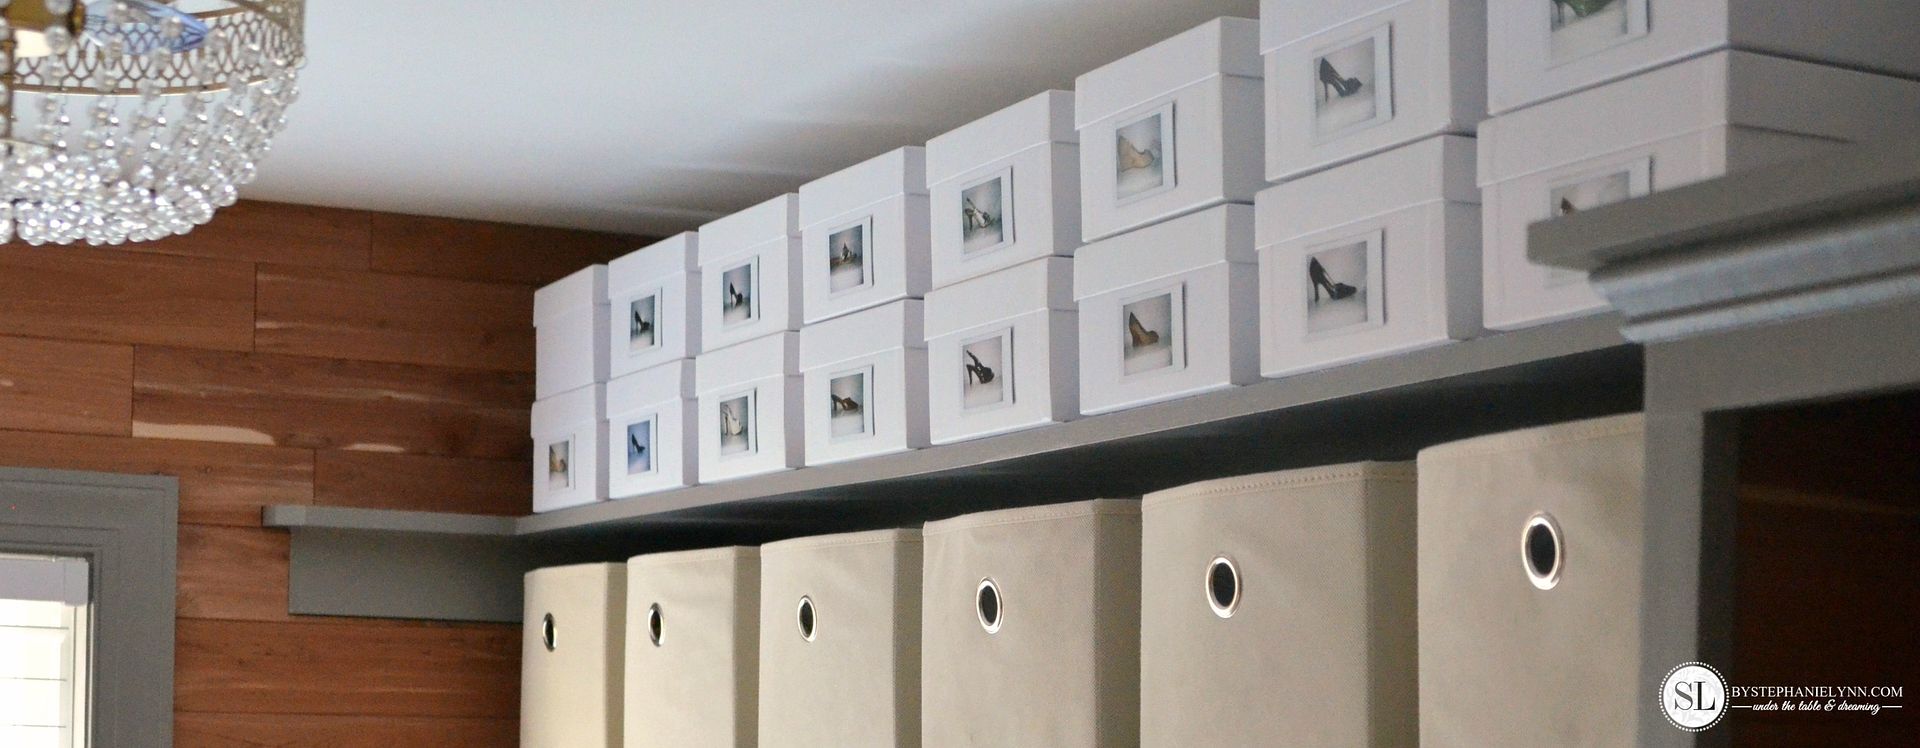 Shoe Storage Organization DIY Photo Shoeboxes Closet Ideas #michaelsmakers 